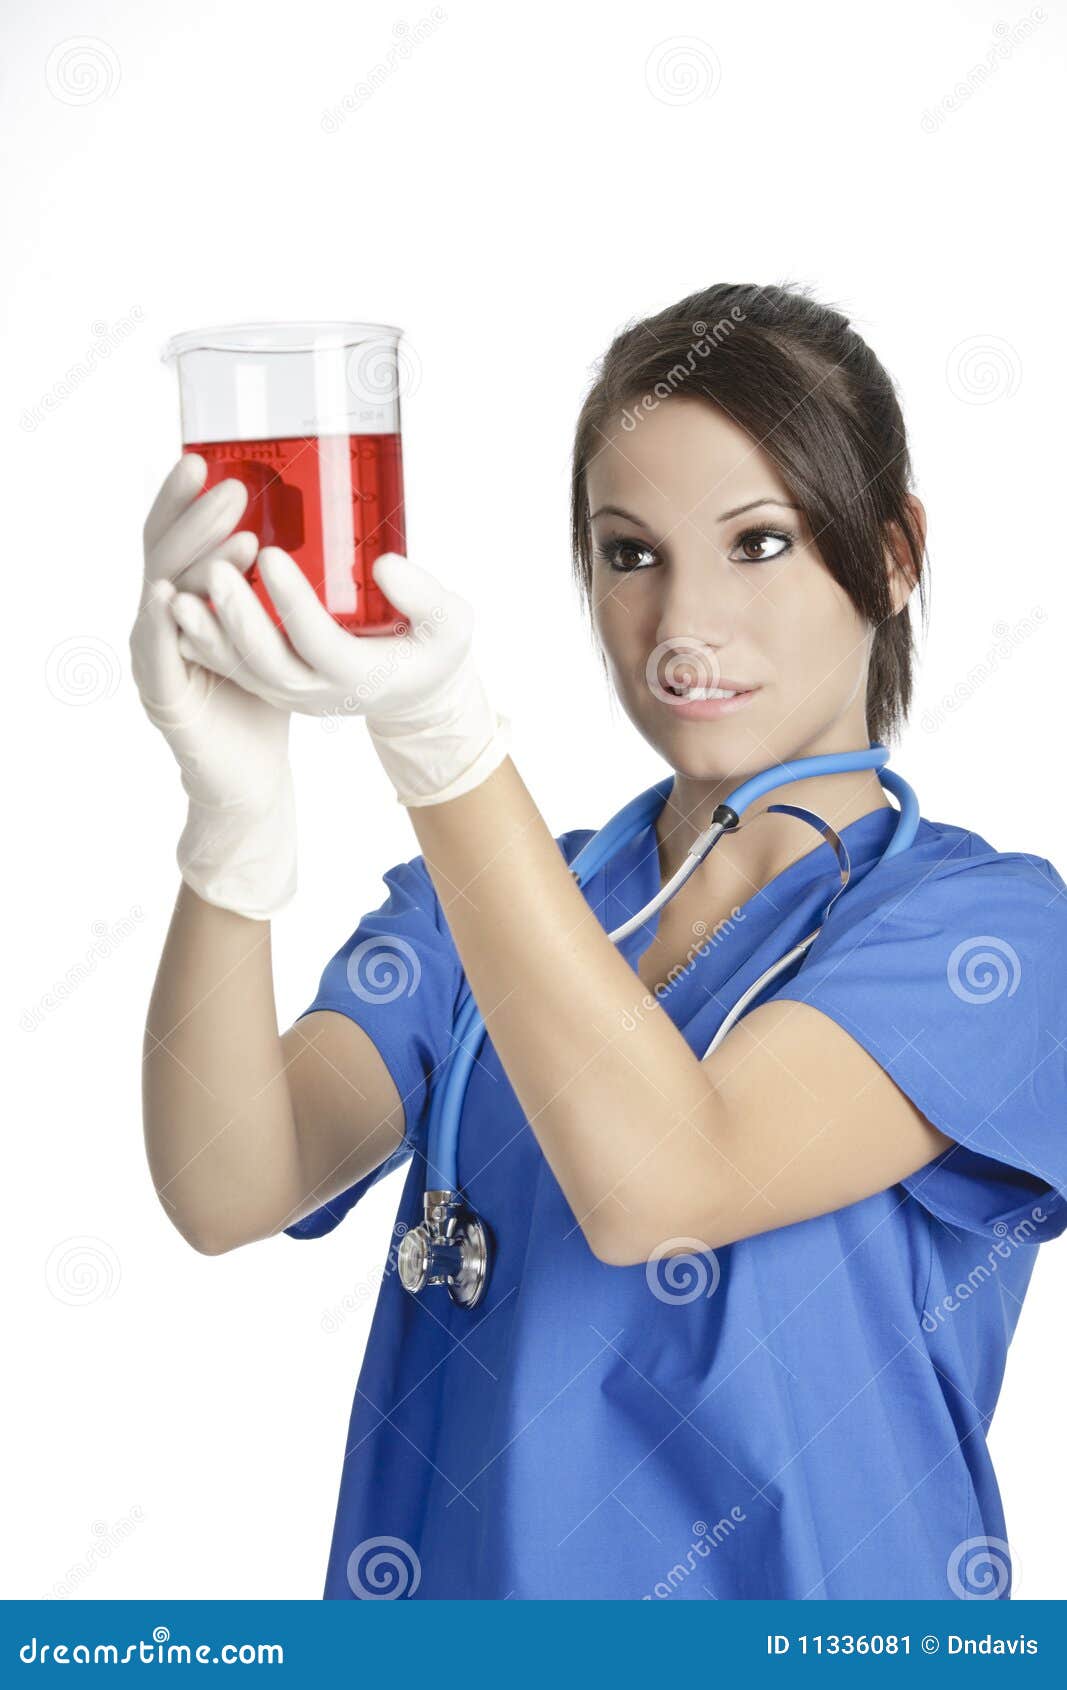 caucasian woman working as a laboratory technician studing a beaker